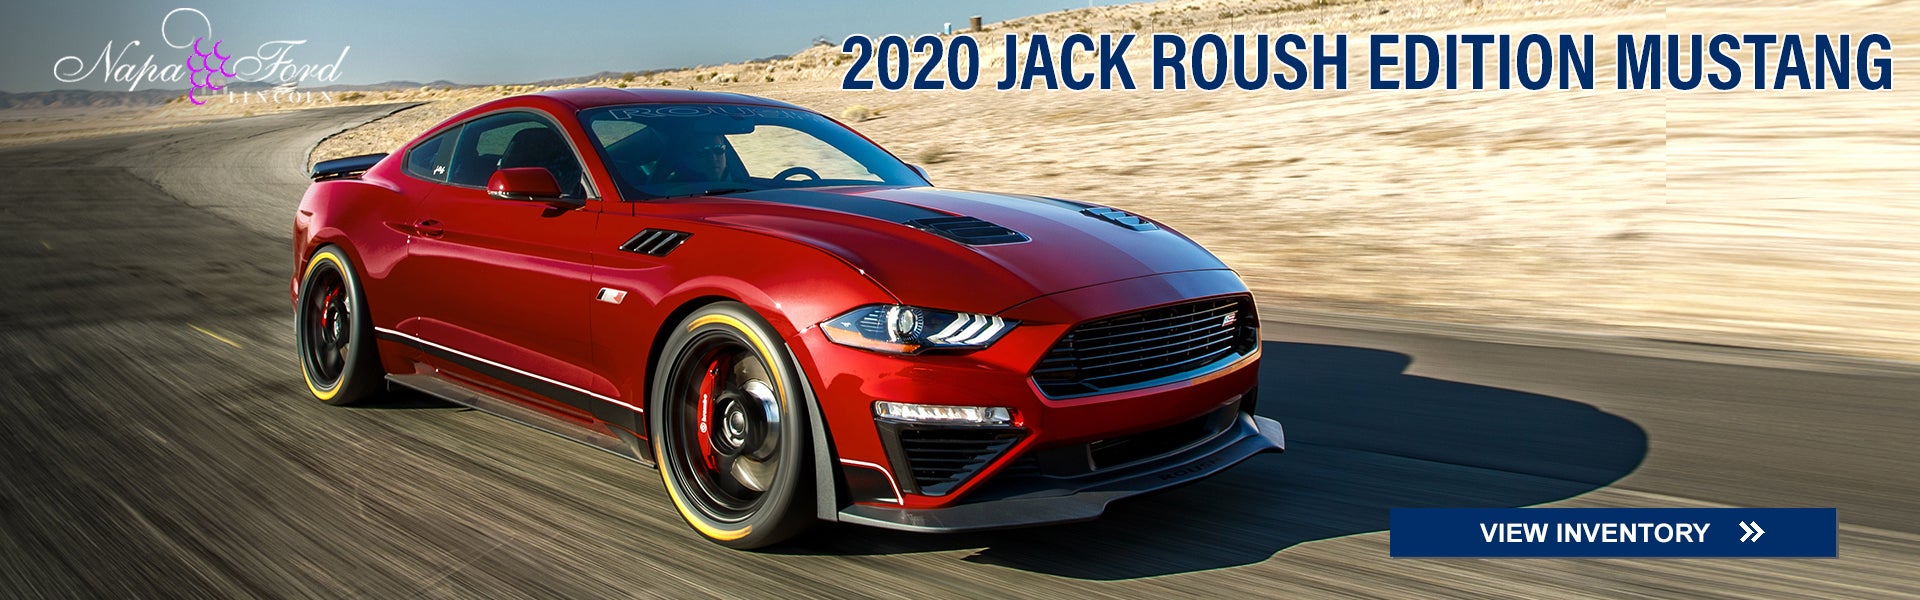 2020 Jack Roush Edition Mustang